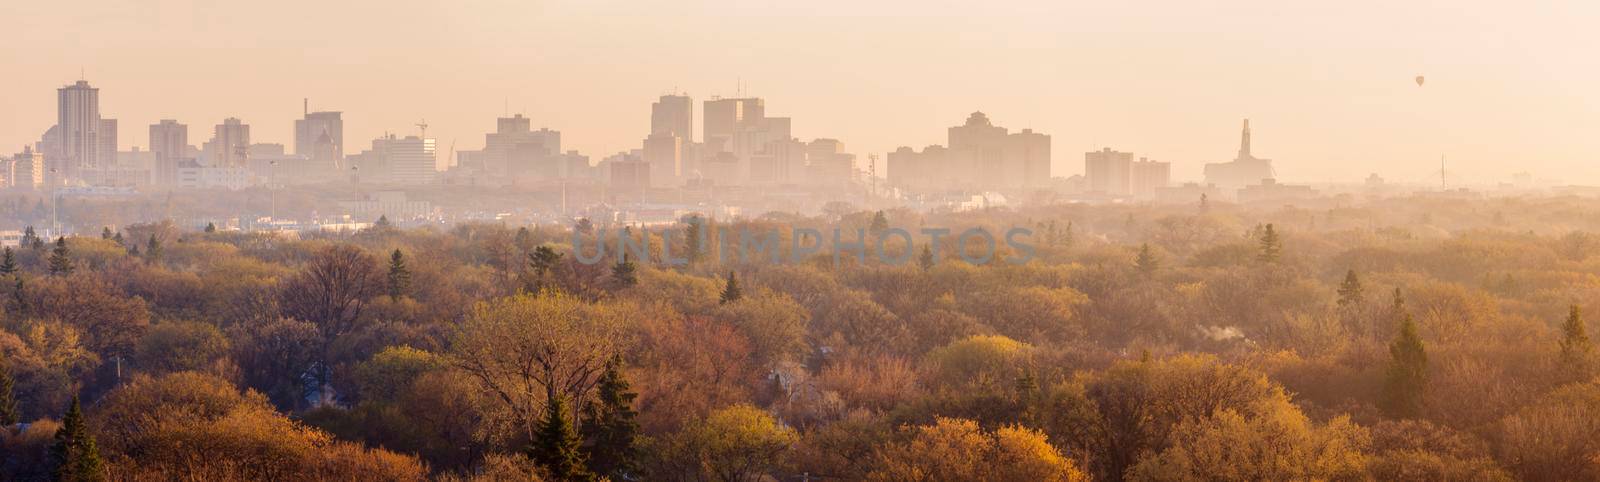 Winnipeg panorama at sunrise. Wynnipeg, Manitoba, Canada.